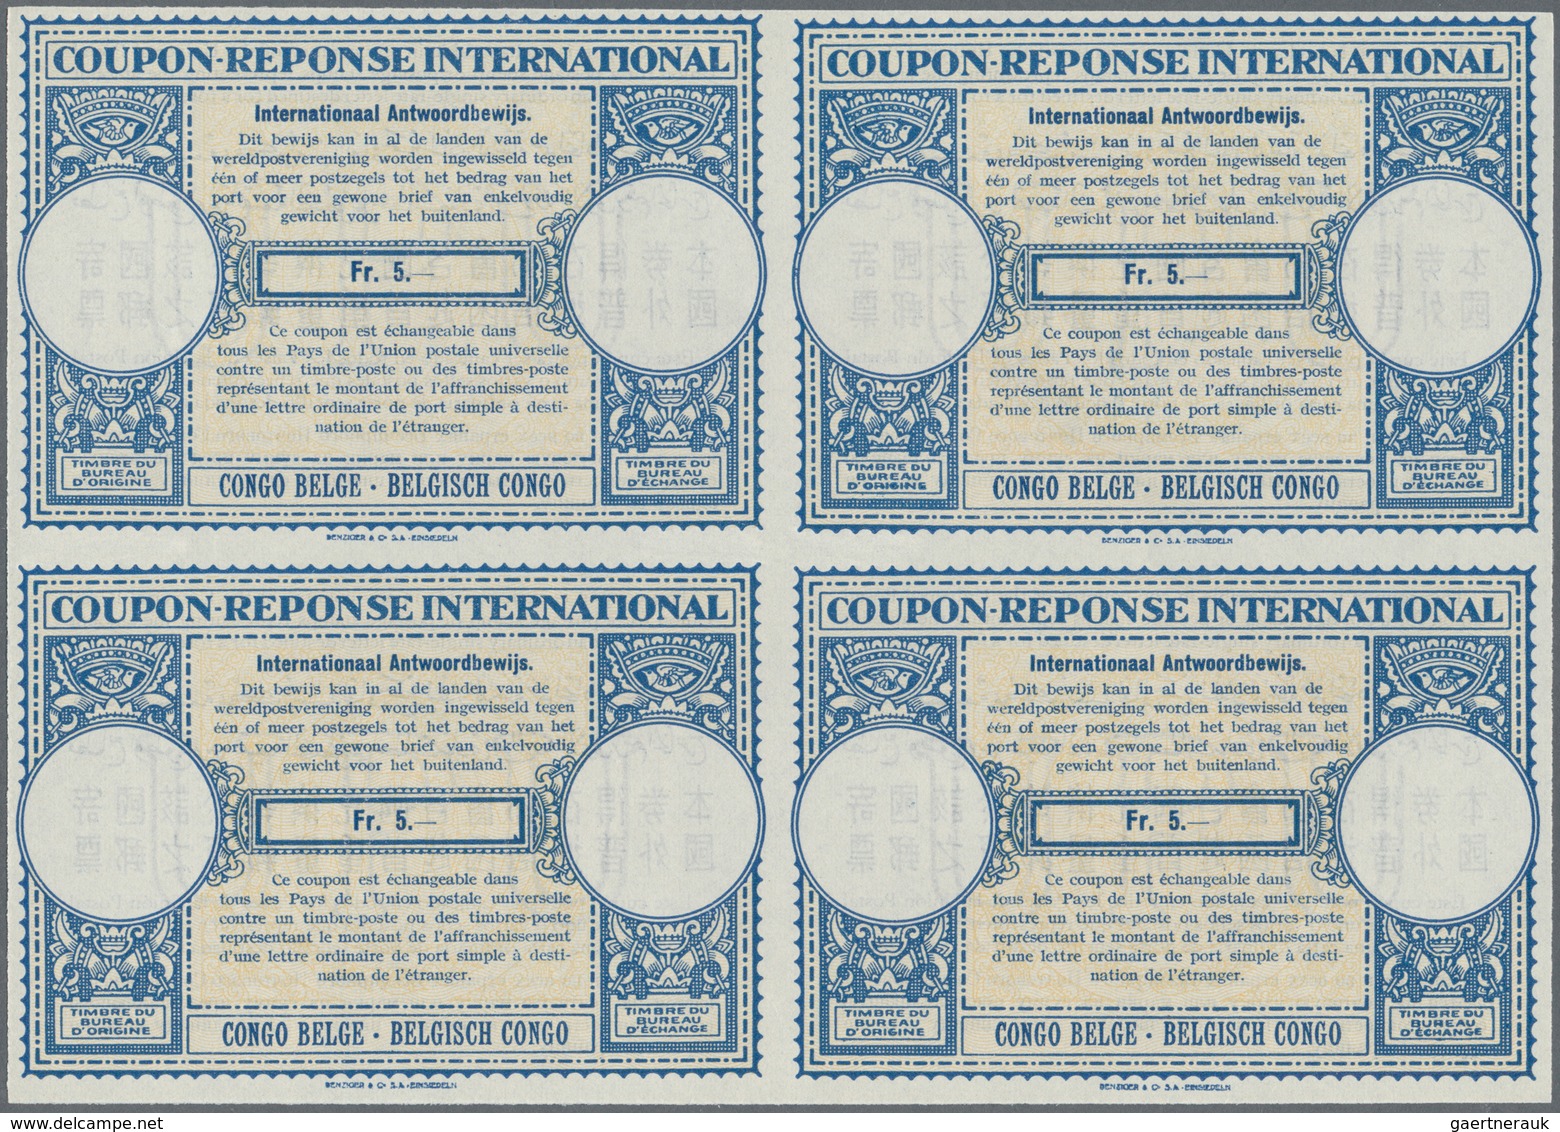 Belgisch-Kongo: 1950/1953. Lot Of 2 Different Intl. Reply Coupons (London Type) Each In An Unused Bl - Sammlungen